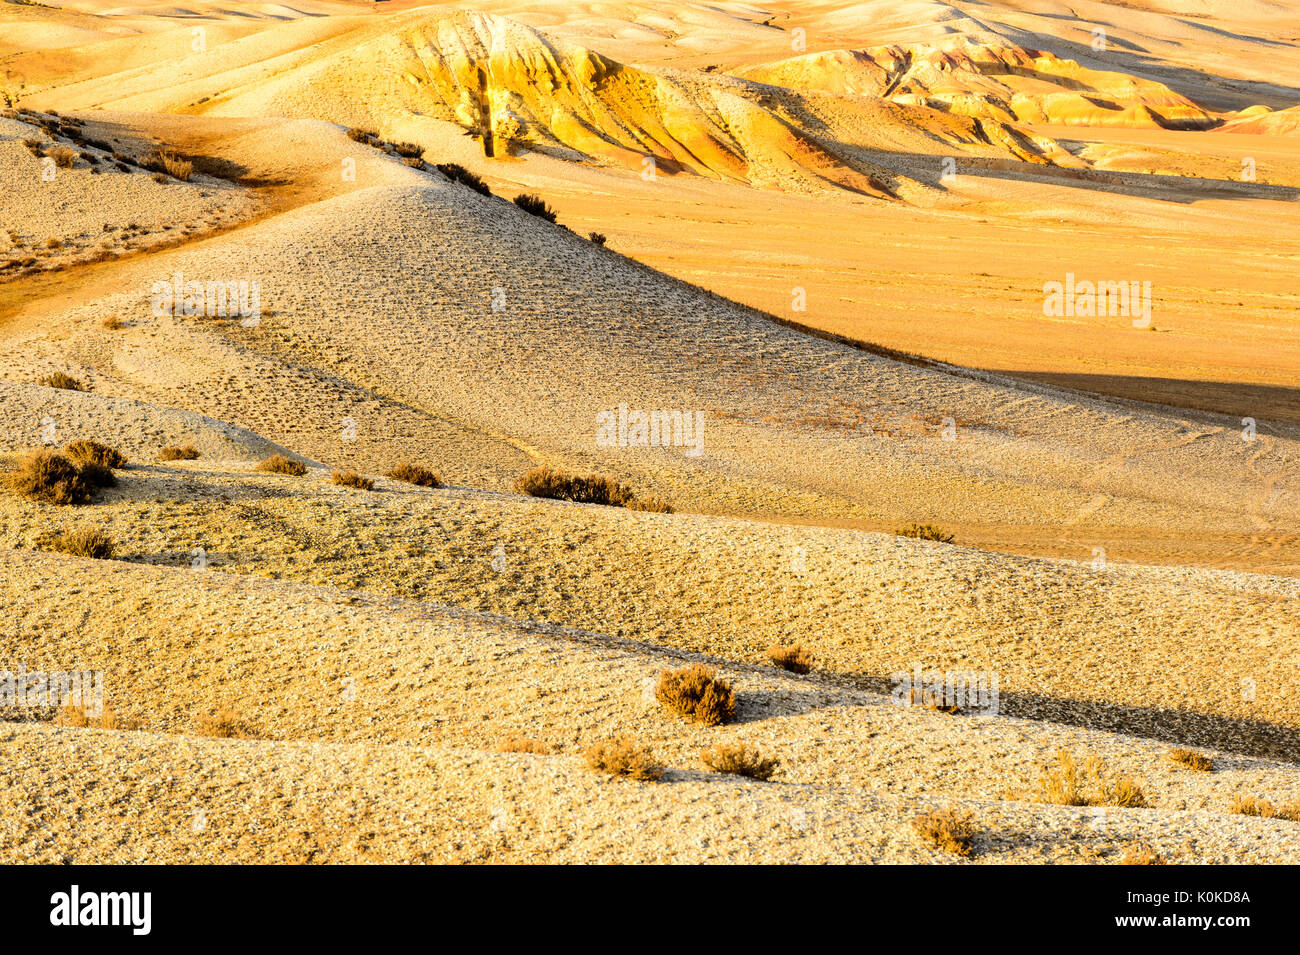 sand deserts Stock Photo